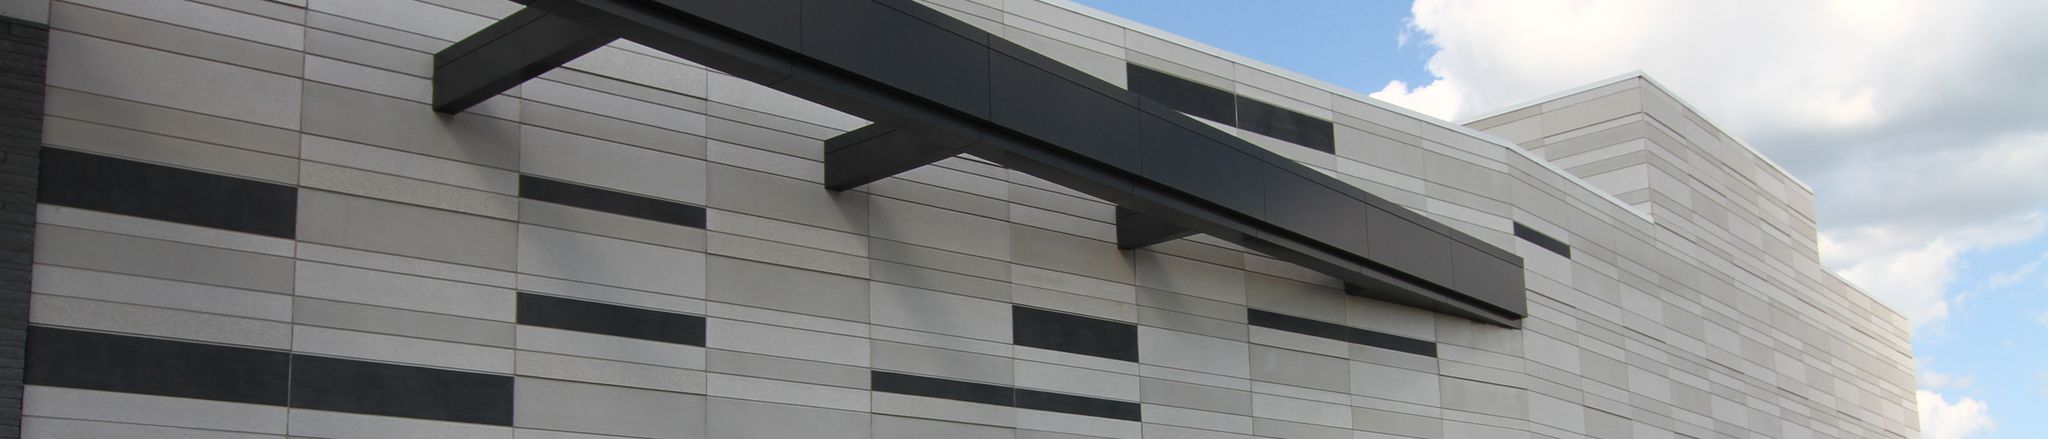 Detail of grey concrete building exterior